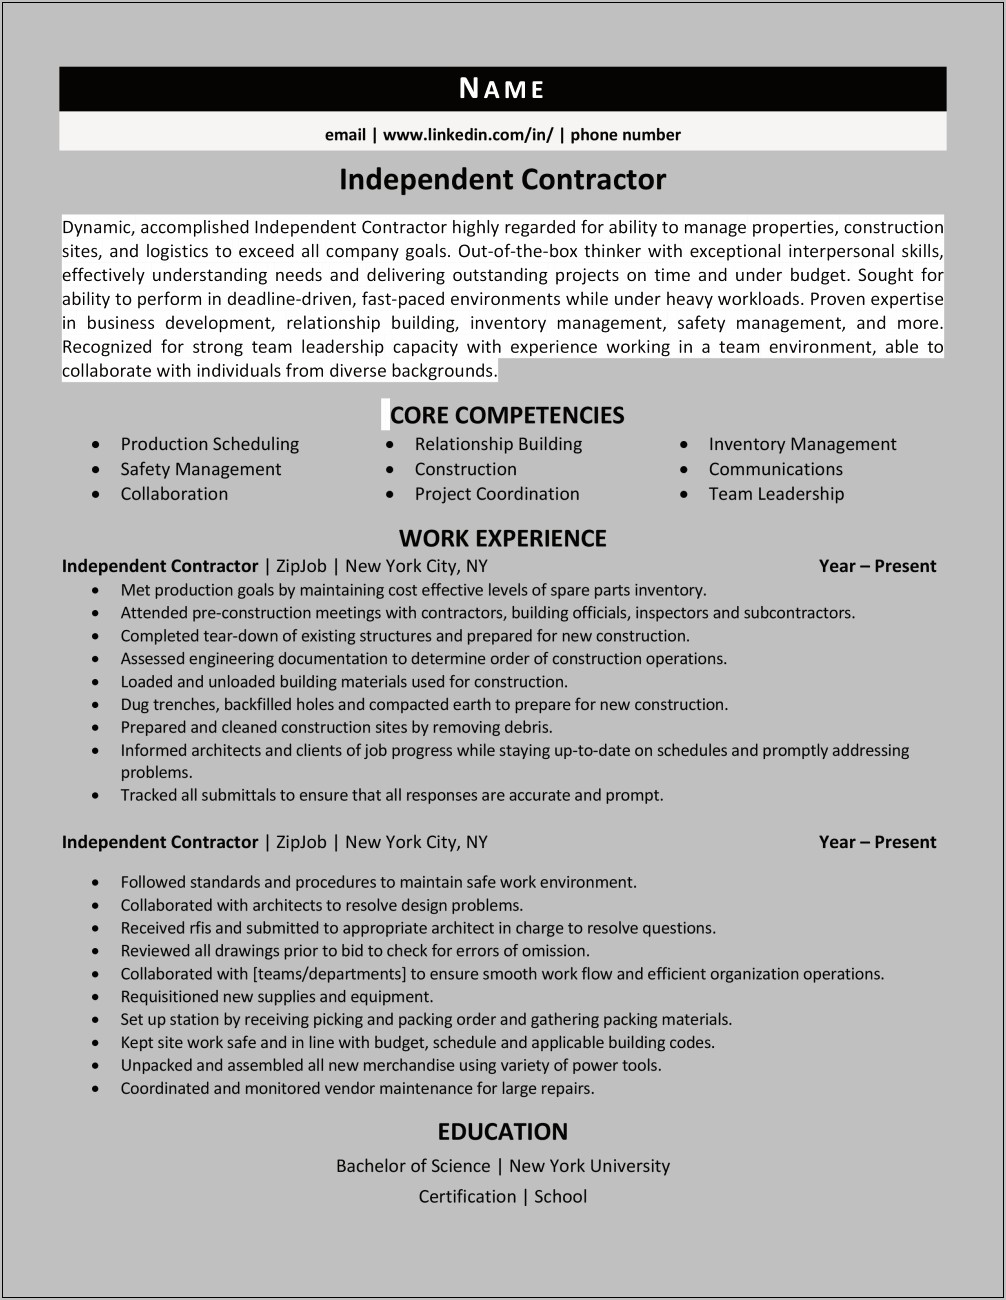 Resume Description For Self Employed Contractor